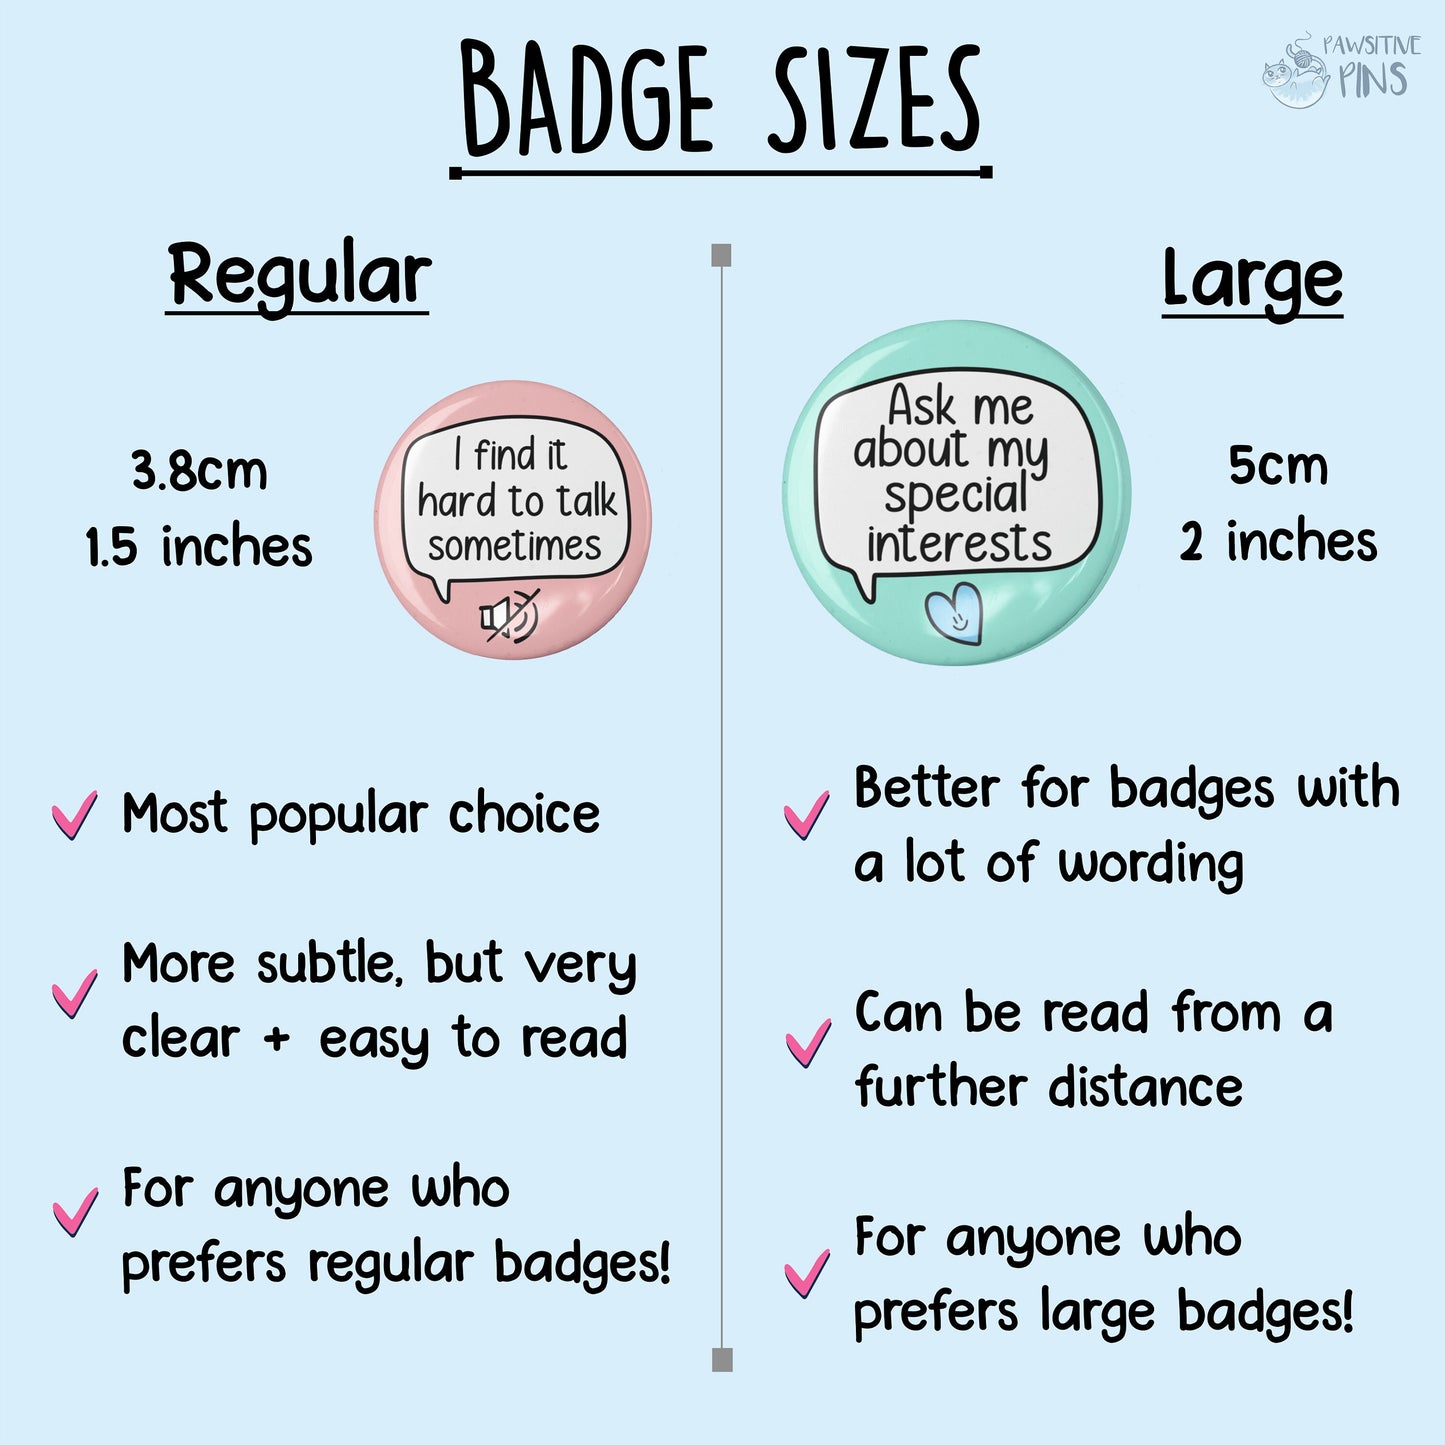 I Like To Fidget Badge Pin | Stimming Pins, Stim, Fidget Gift